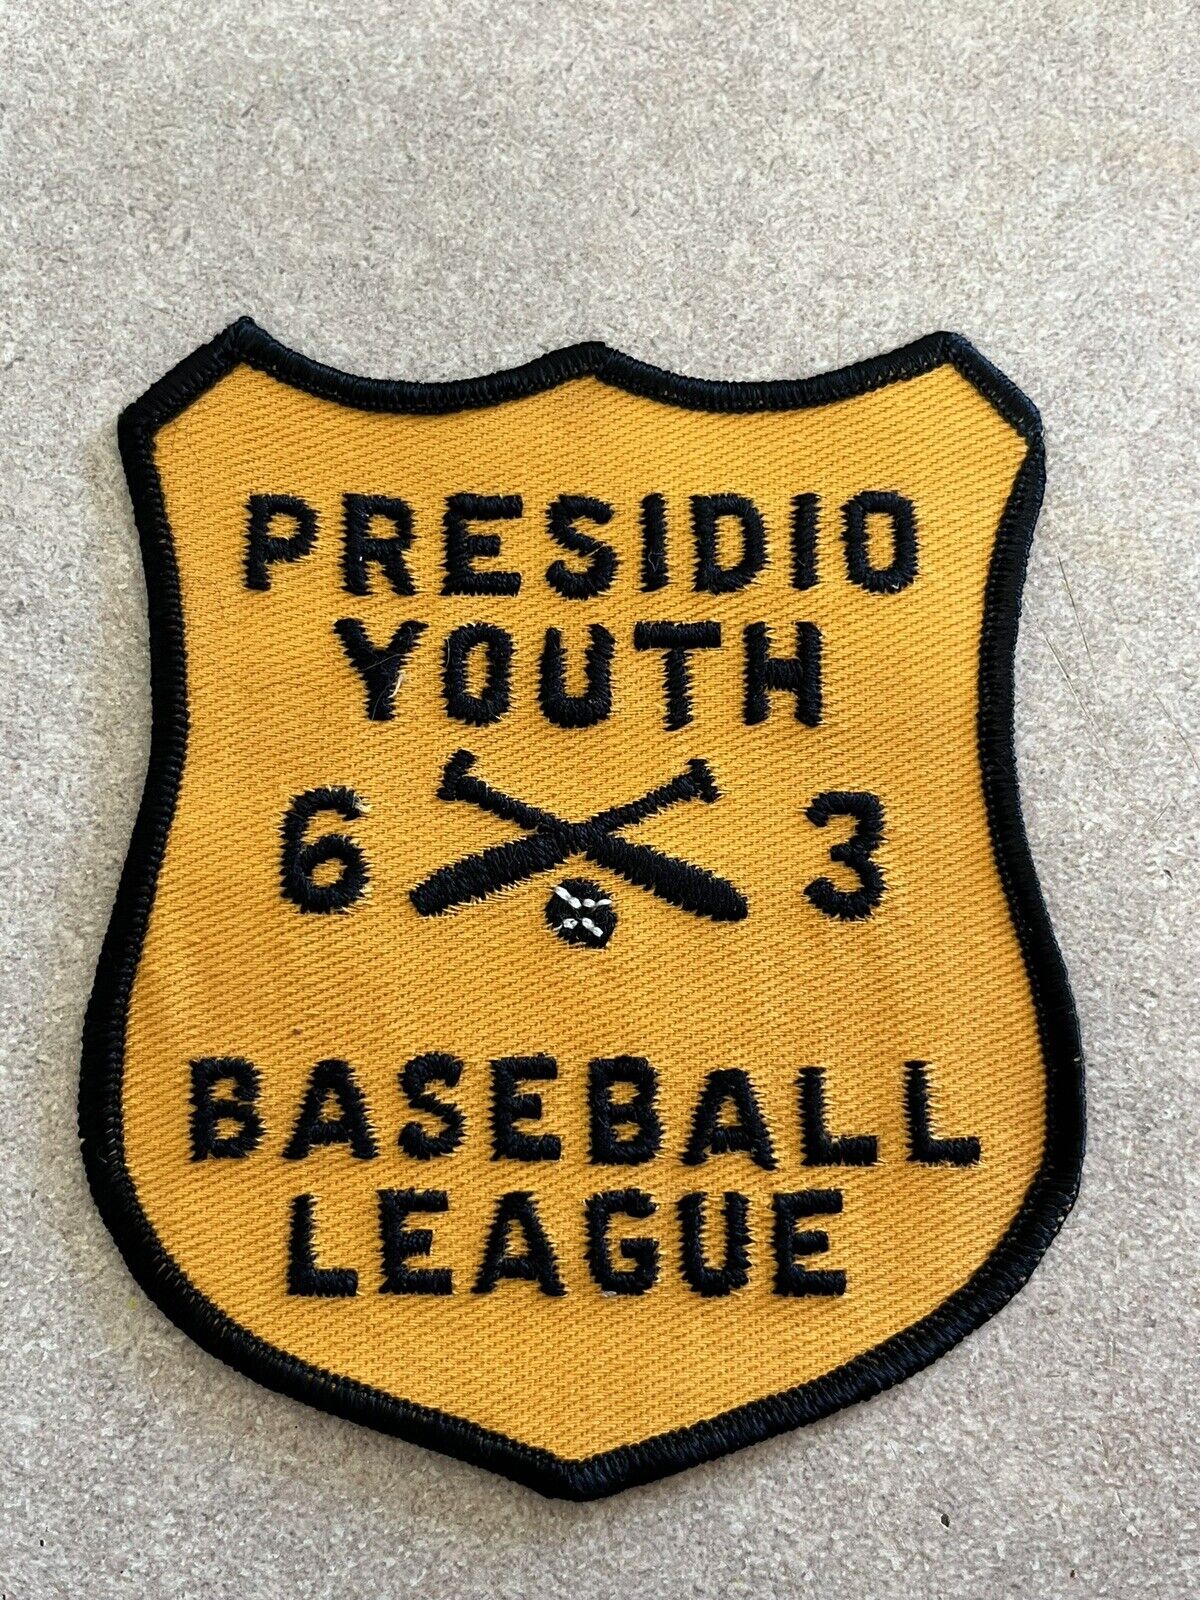 Vintage 1963 Presidio Youth Baseball League Patch